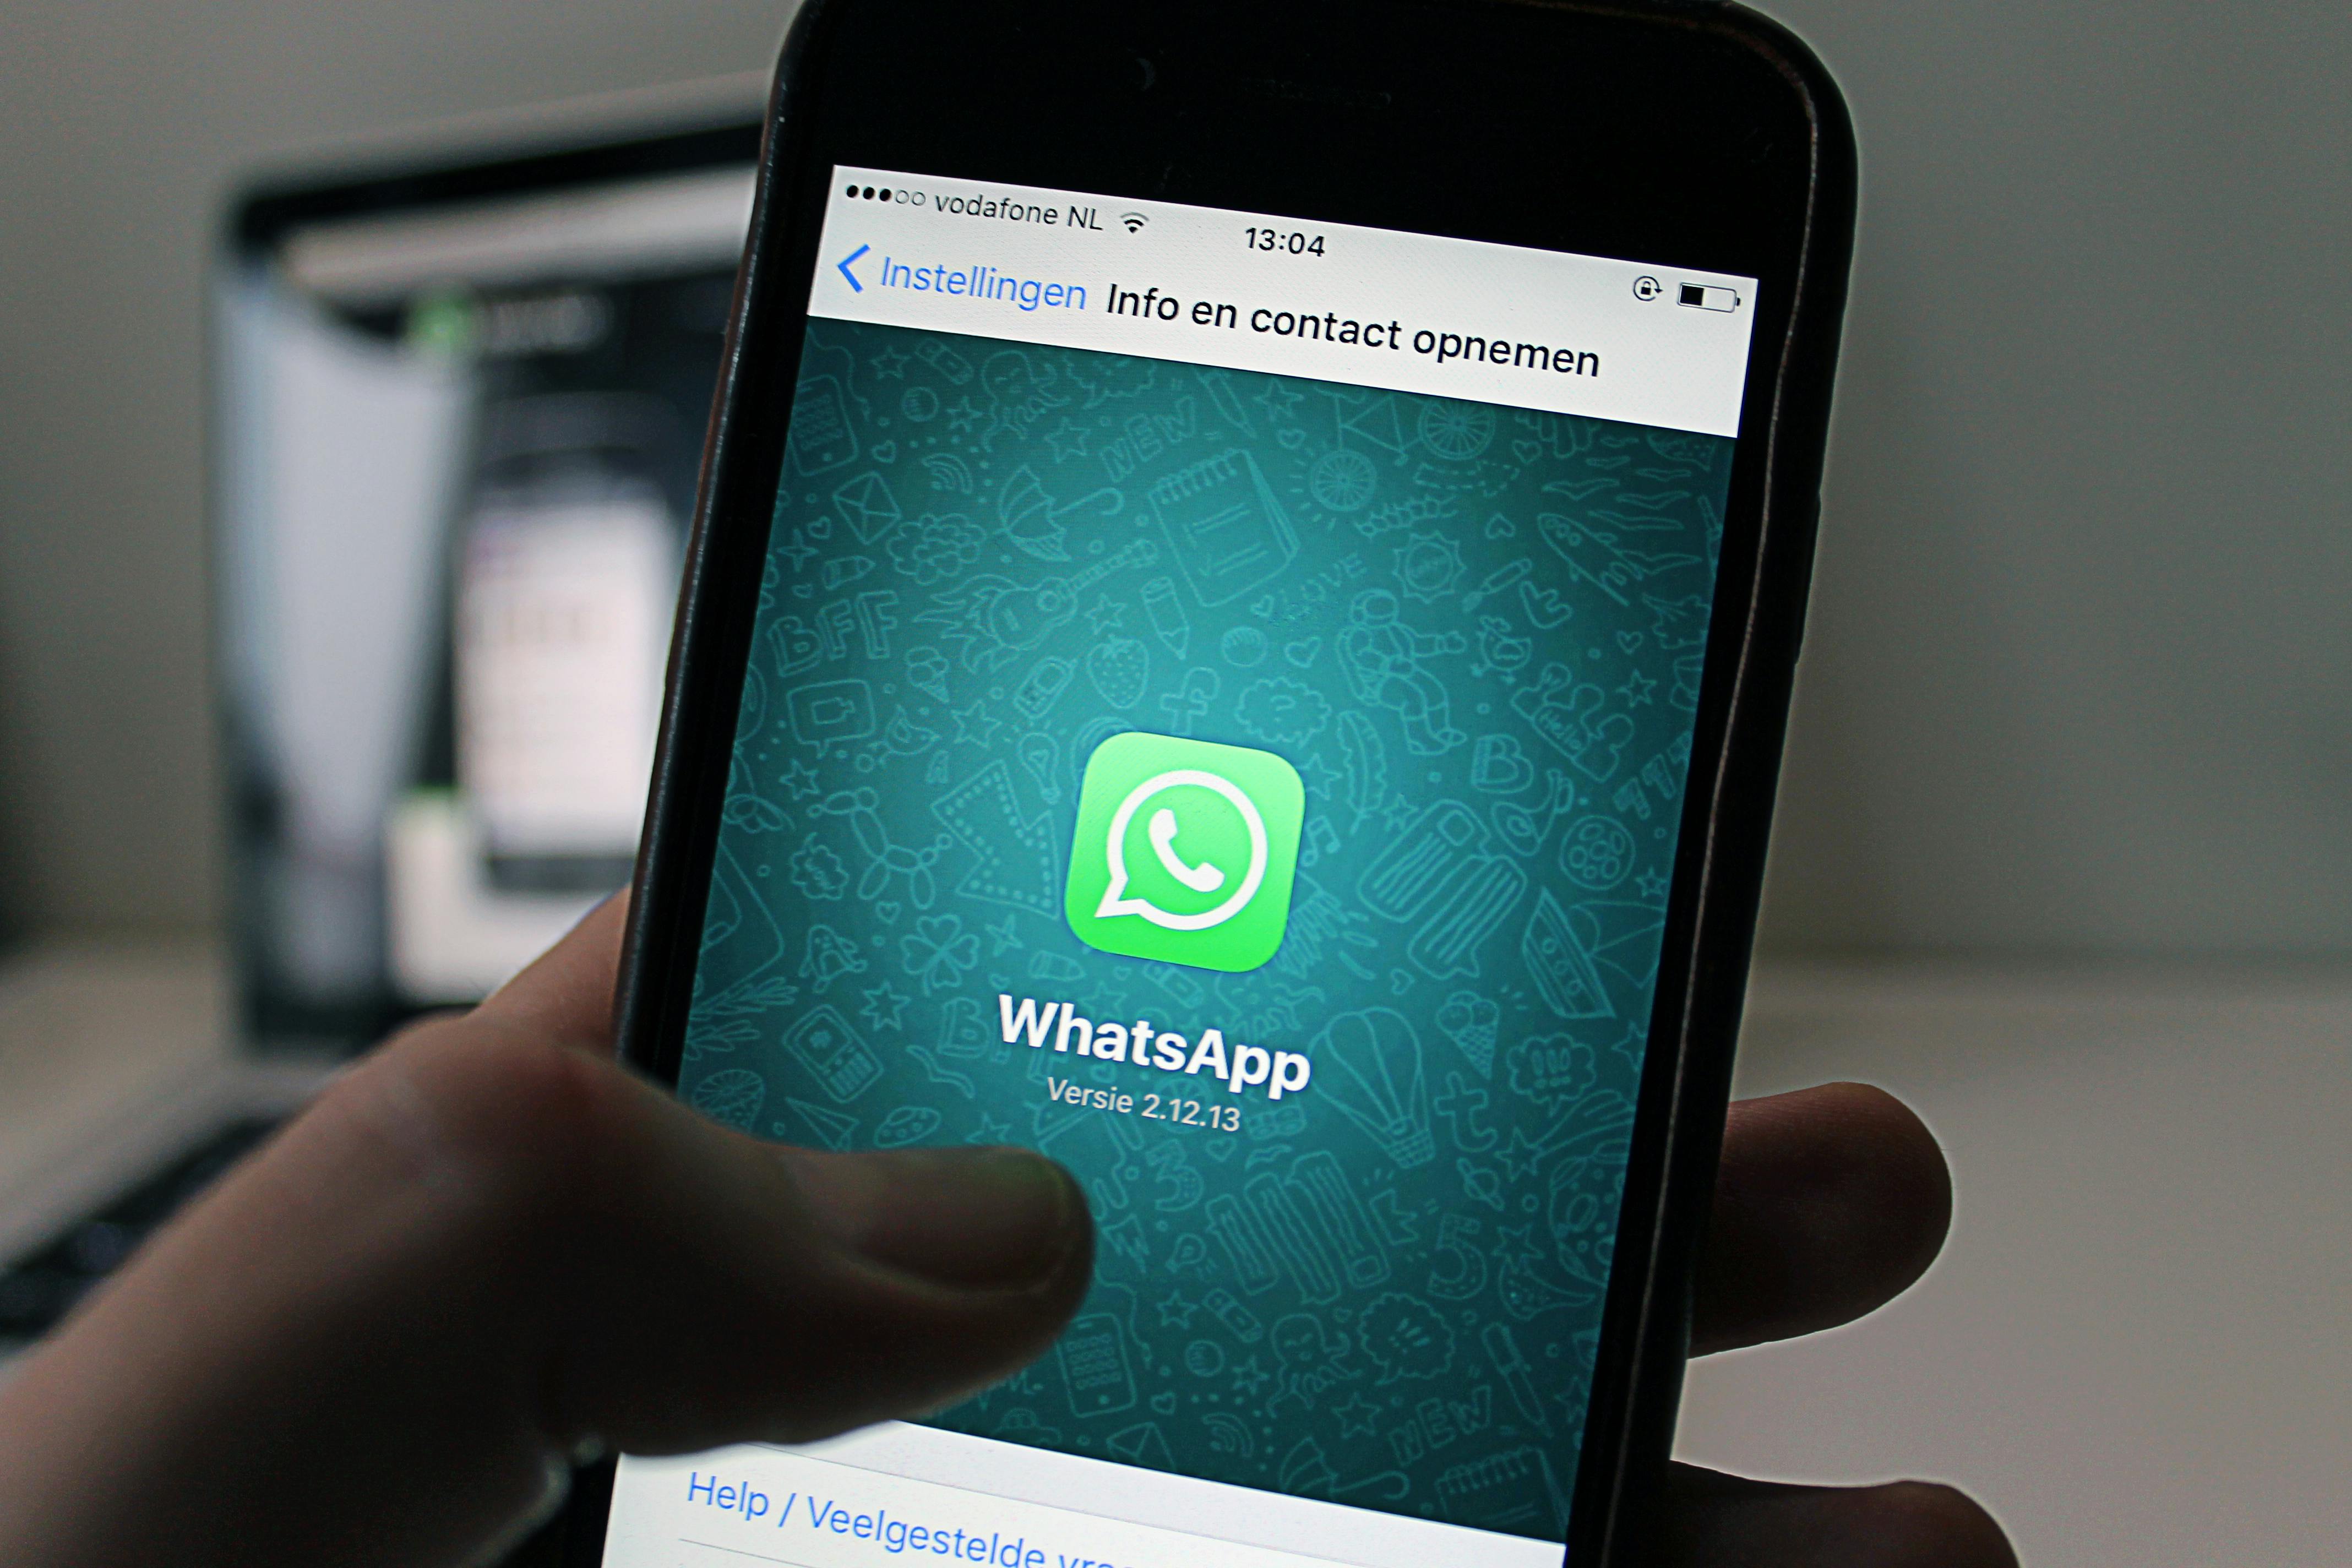 Whatsapp Application Screenshot · Free Stock Photo